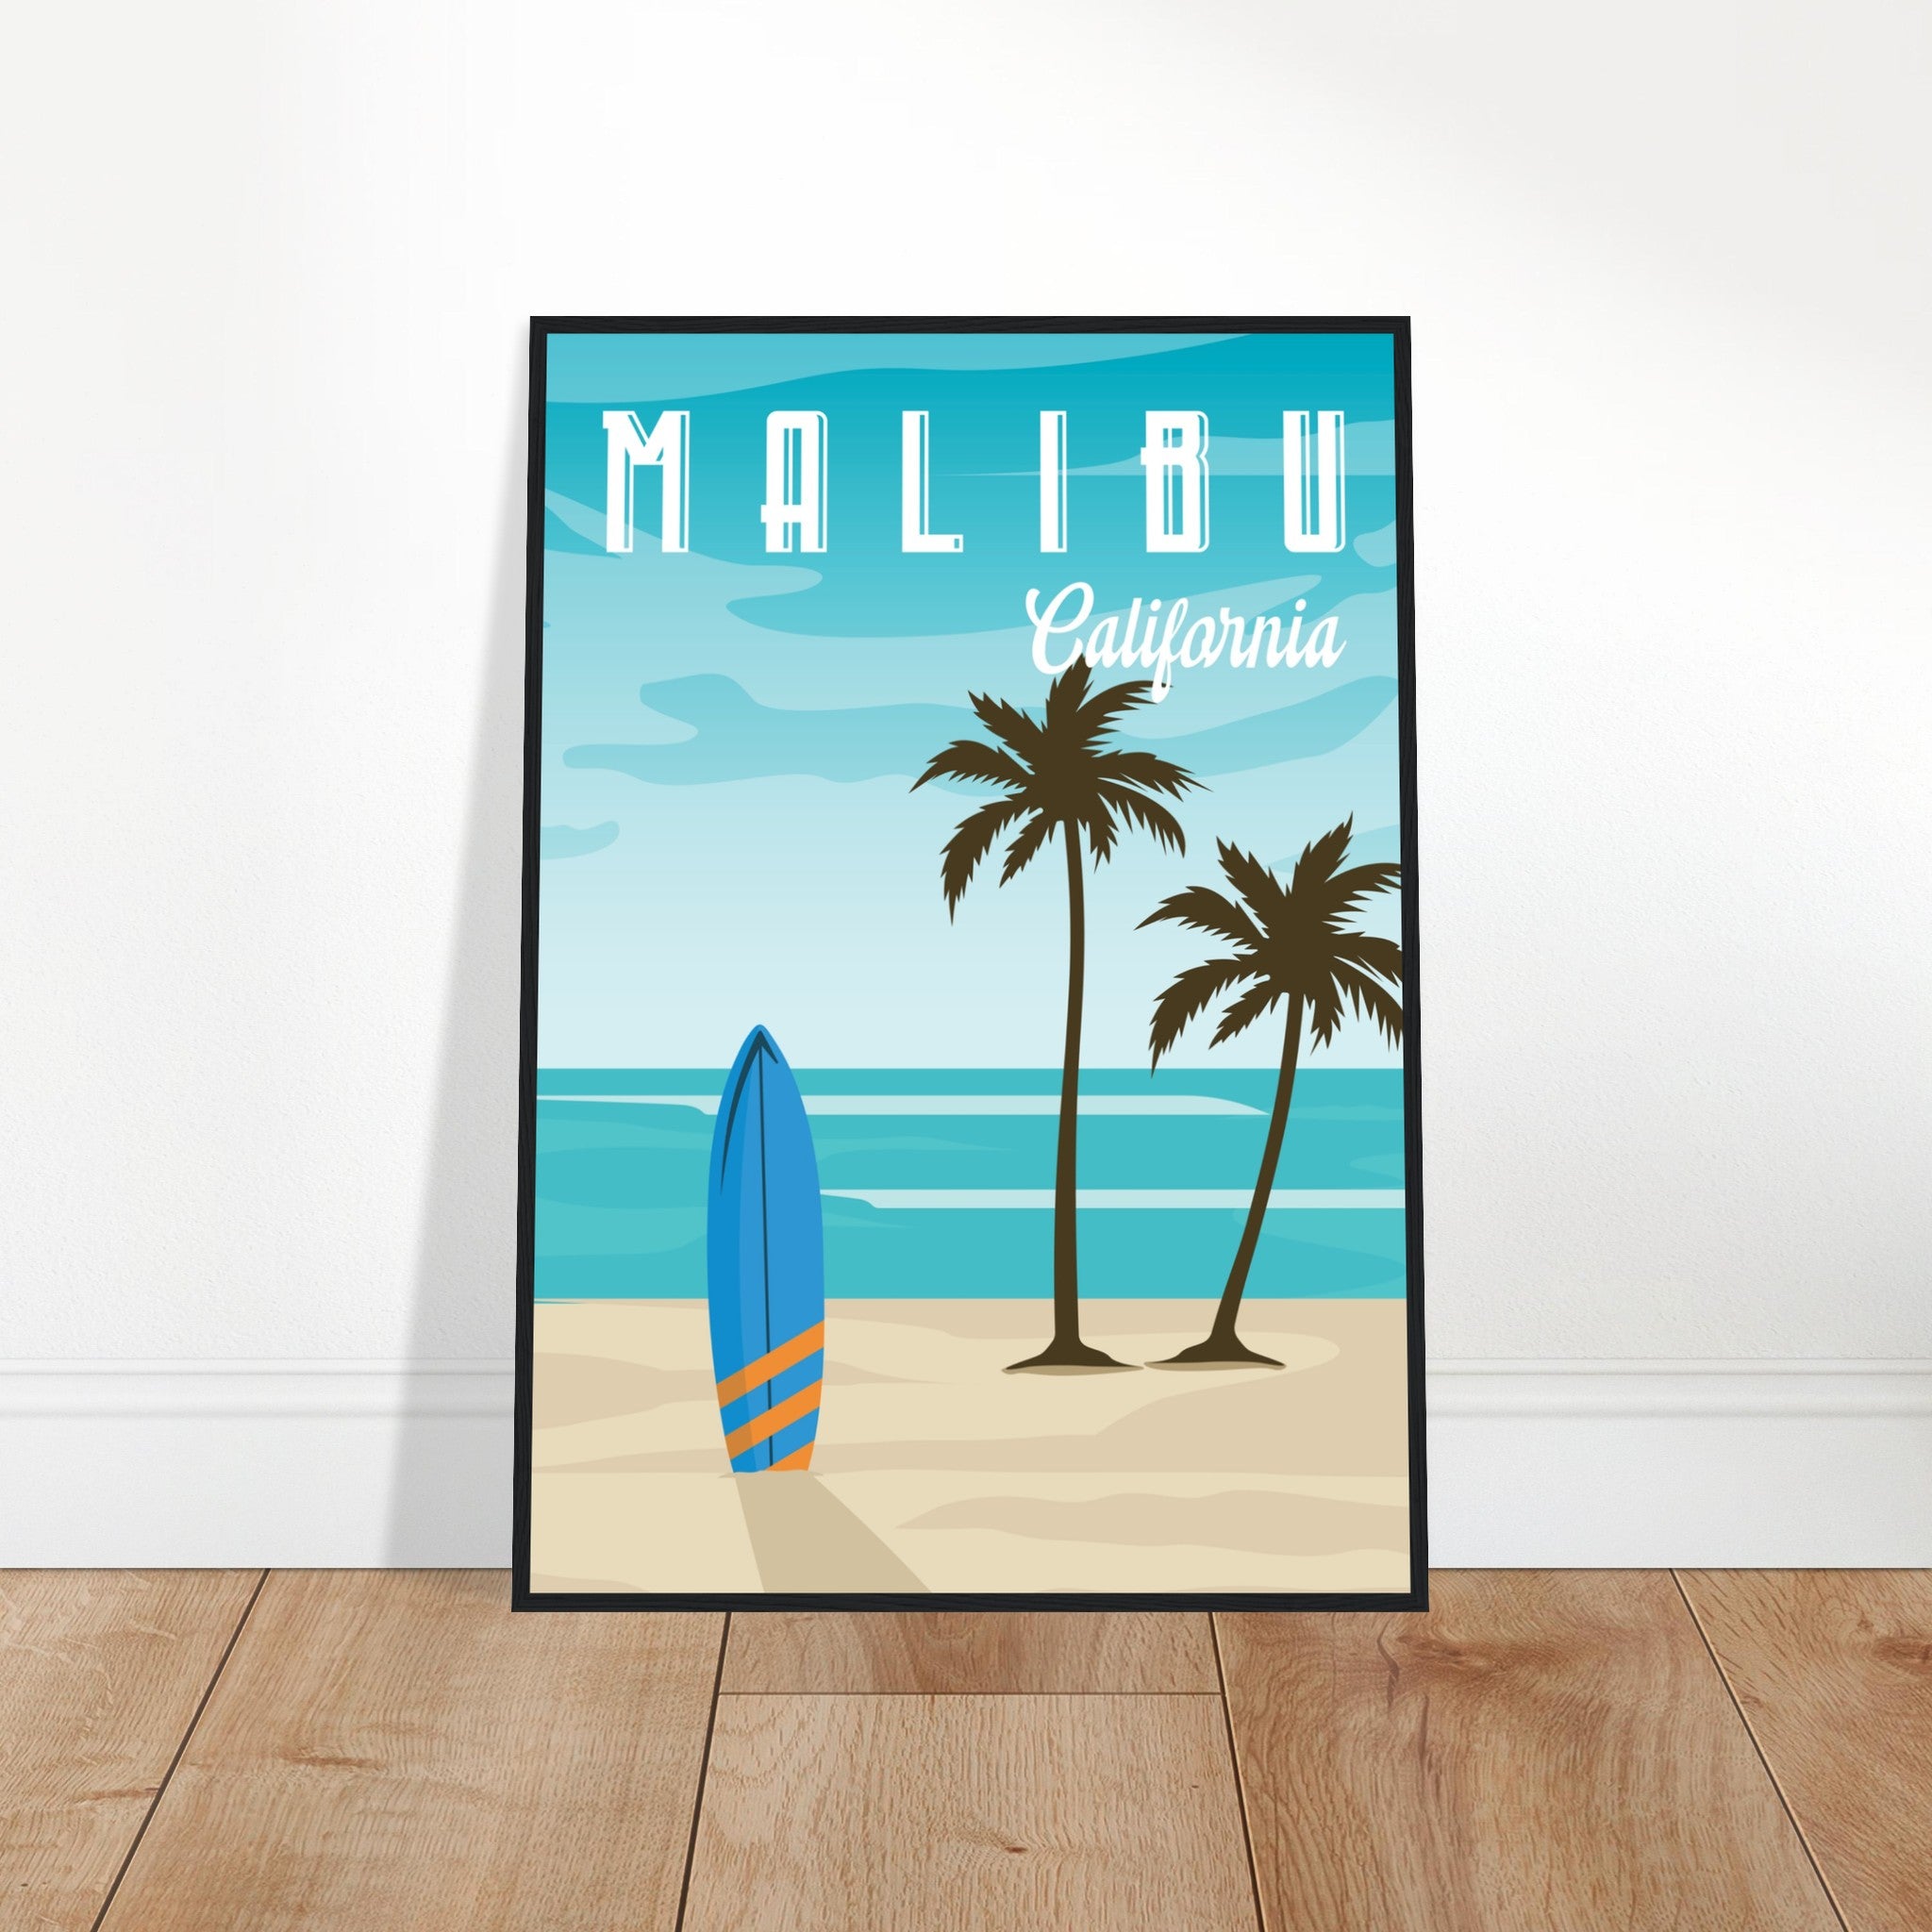 Malibu United States Surfrider Beach City Poster Posters Republic